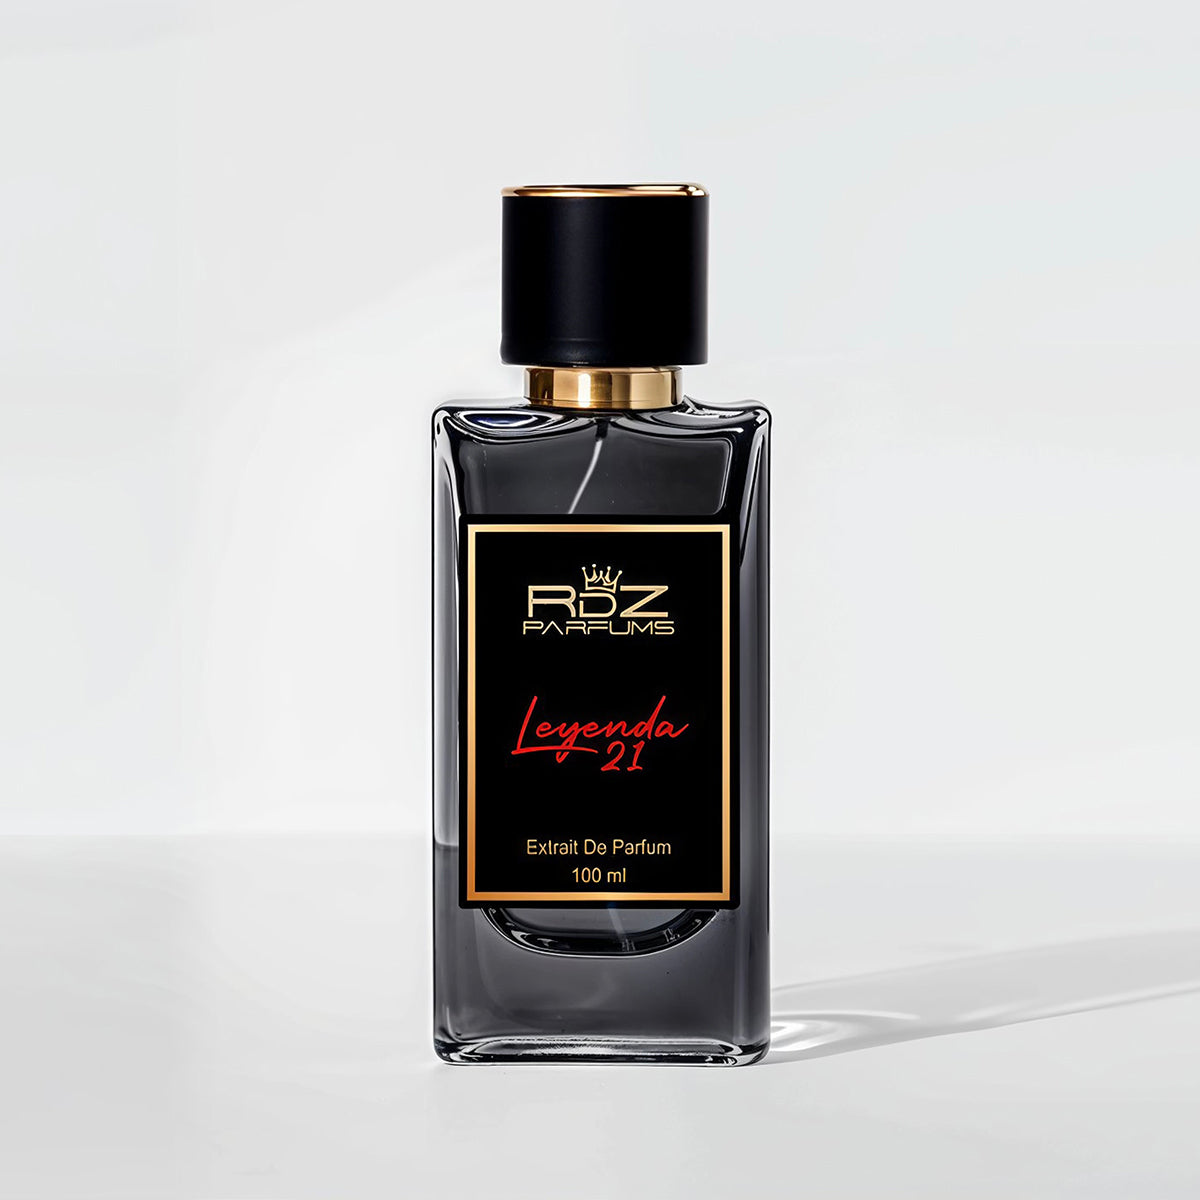 Leyenda 21 – 100ml Extrait de Parfum